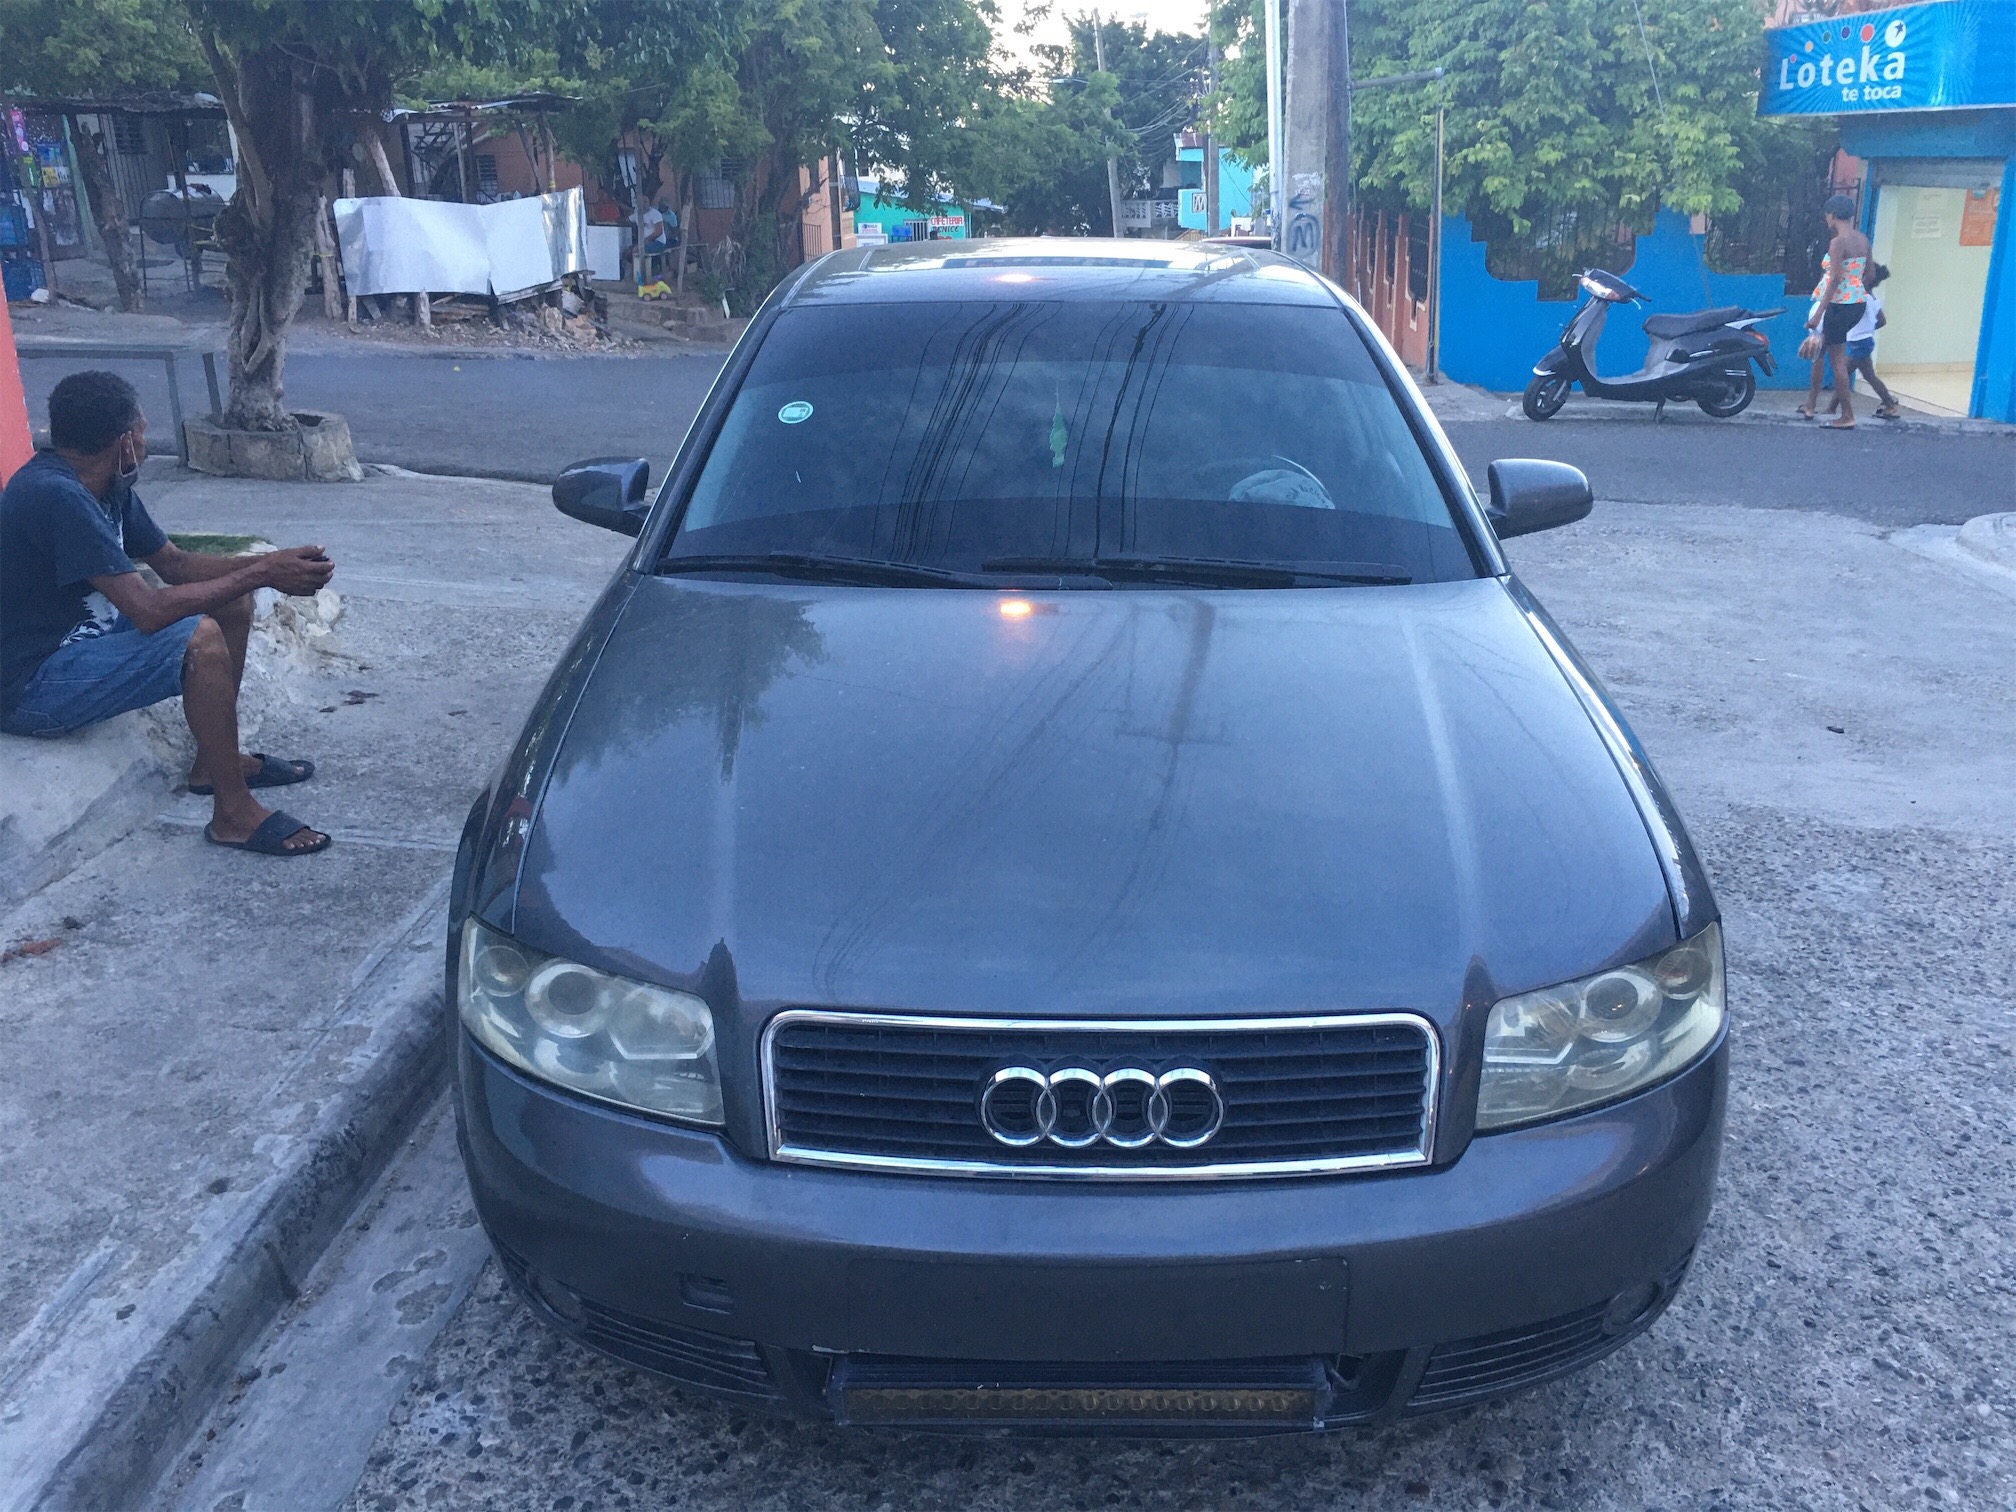 carros - Se Vende o se Cambia Vehículo Audi en Buen Estado, 310,000 pesos negociables.
